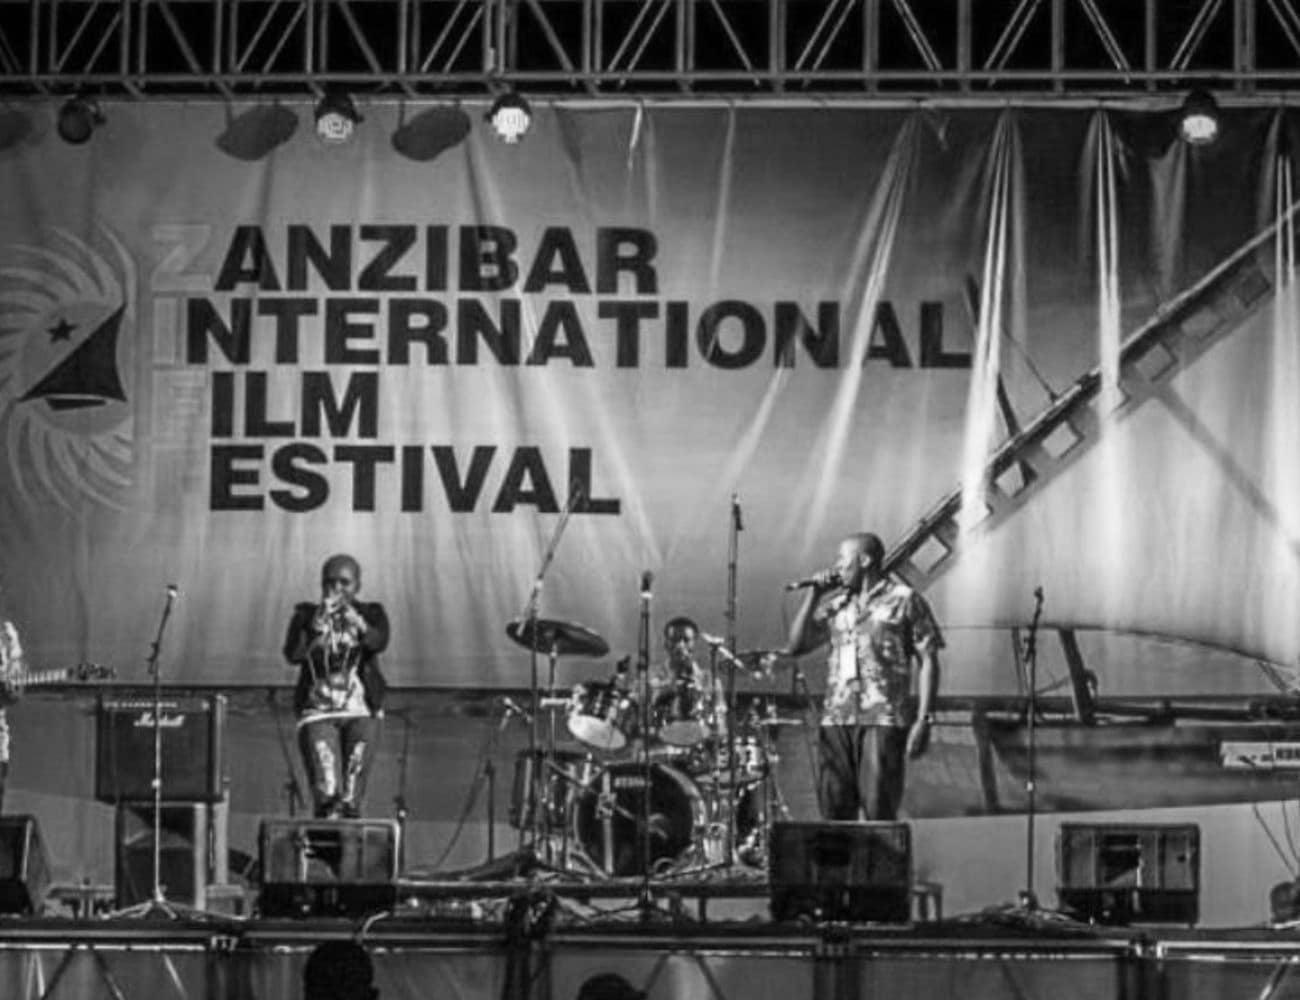 Stage Performance at The Zanzibar International Film